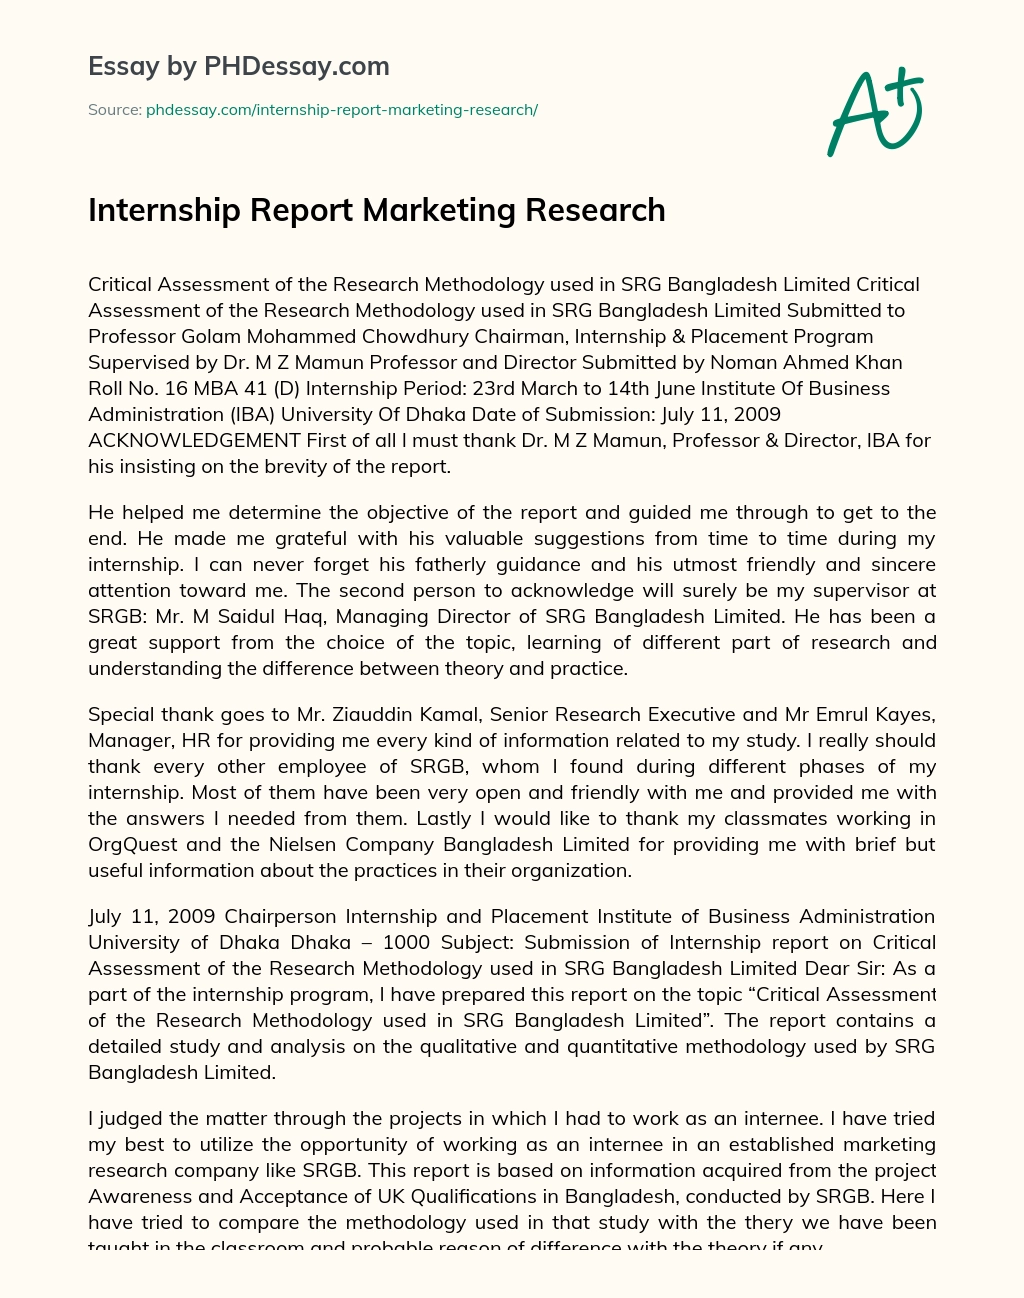 Internship Report Marketing Research essay